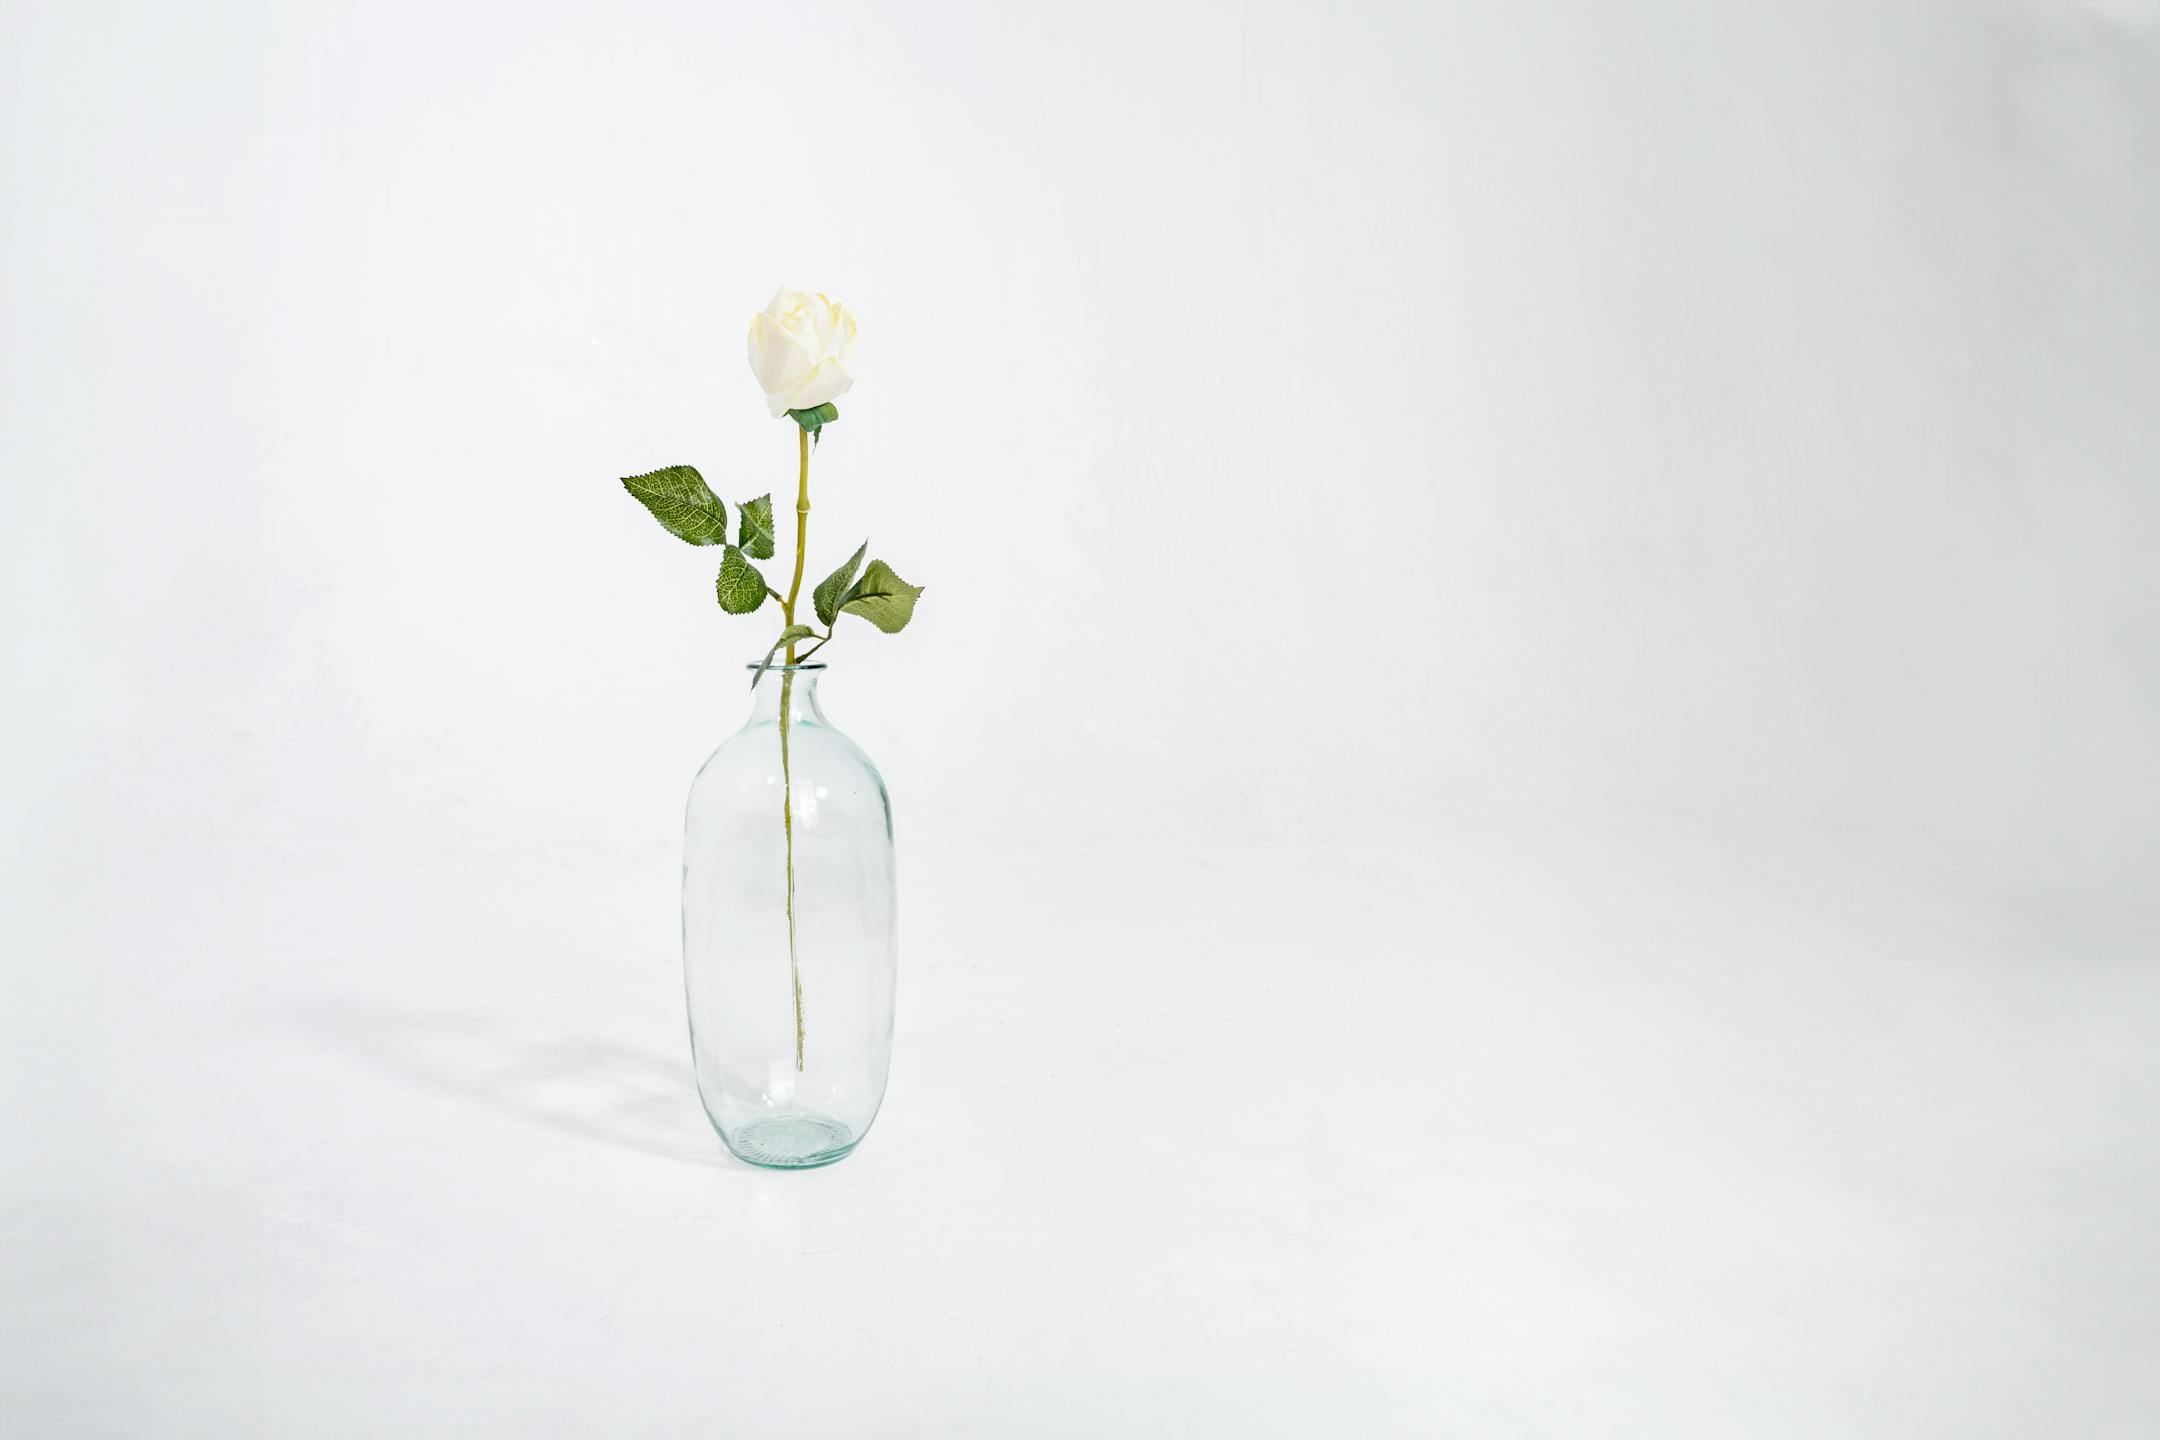 White artificial rose bud stem in glass vase